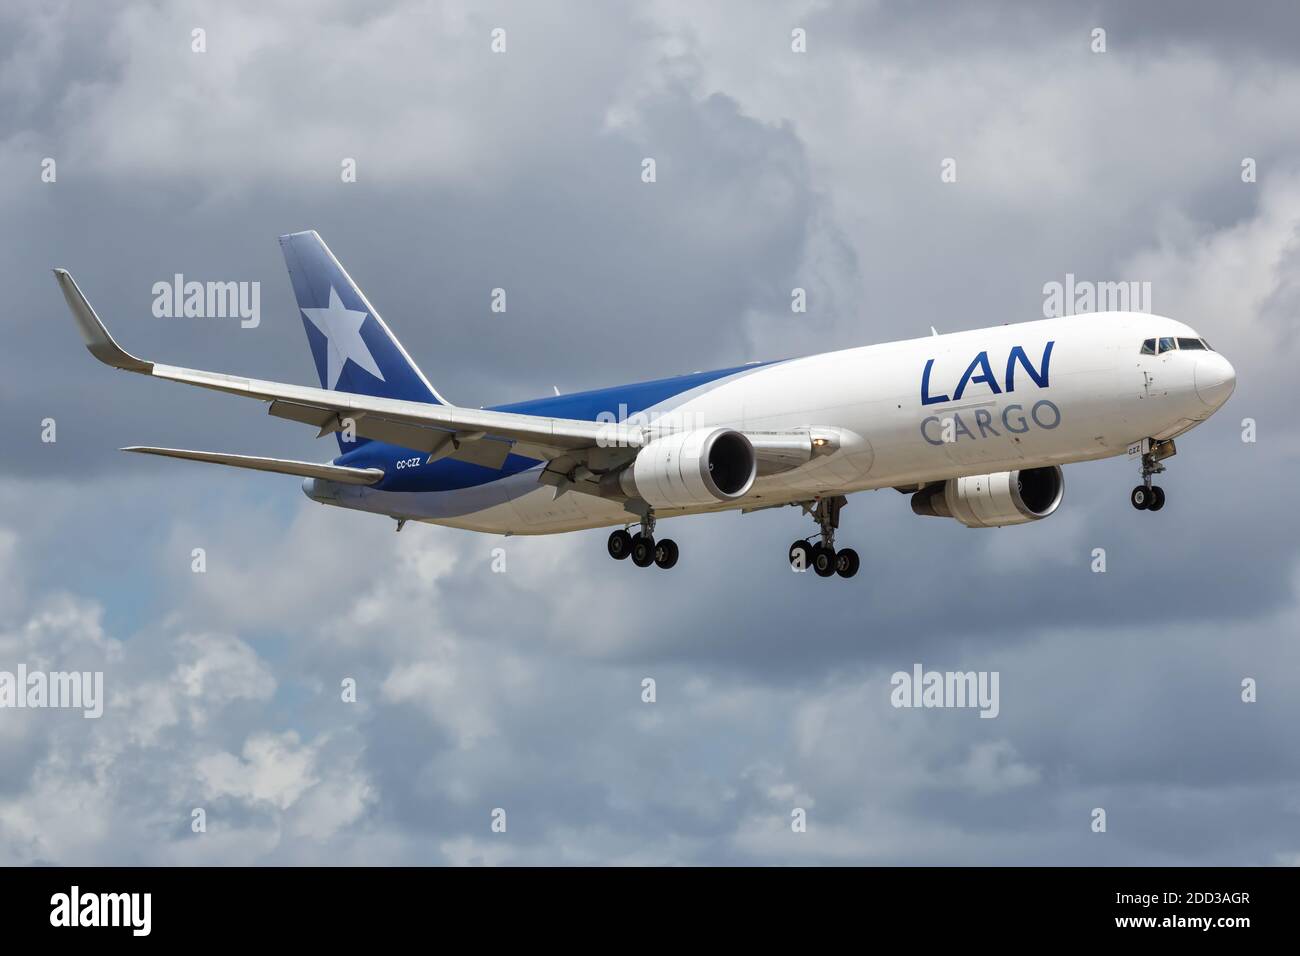 LATAM Cargo Boeing 767-300F & Kalitta/DHL Boeing 747-400F on short